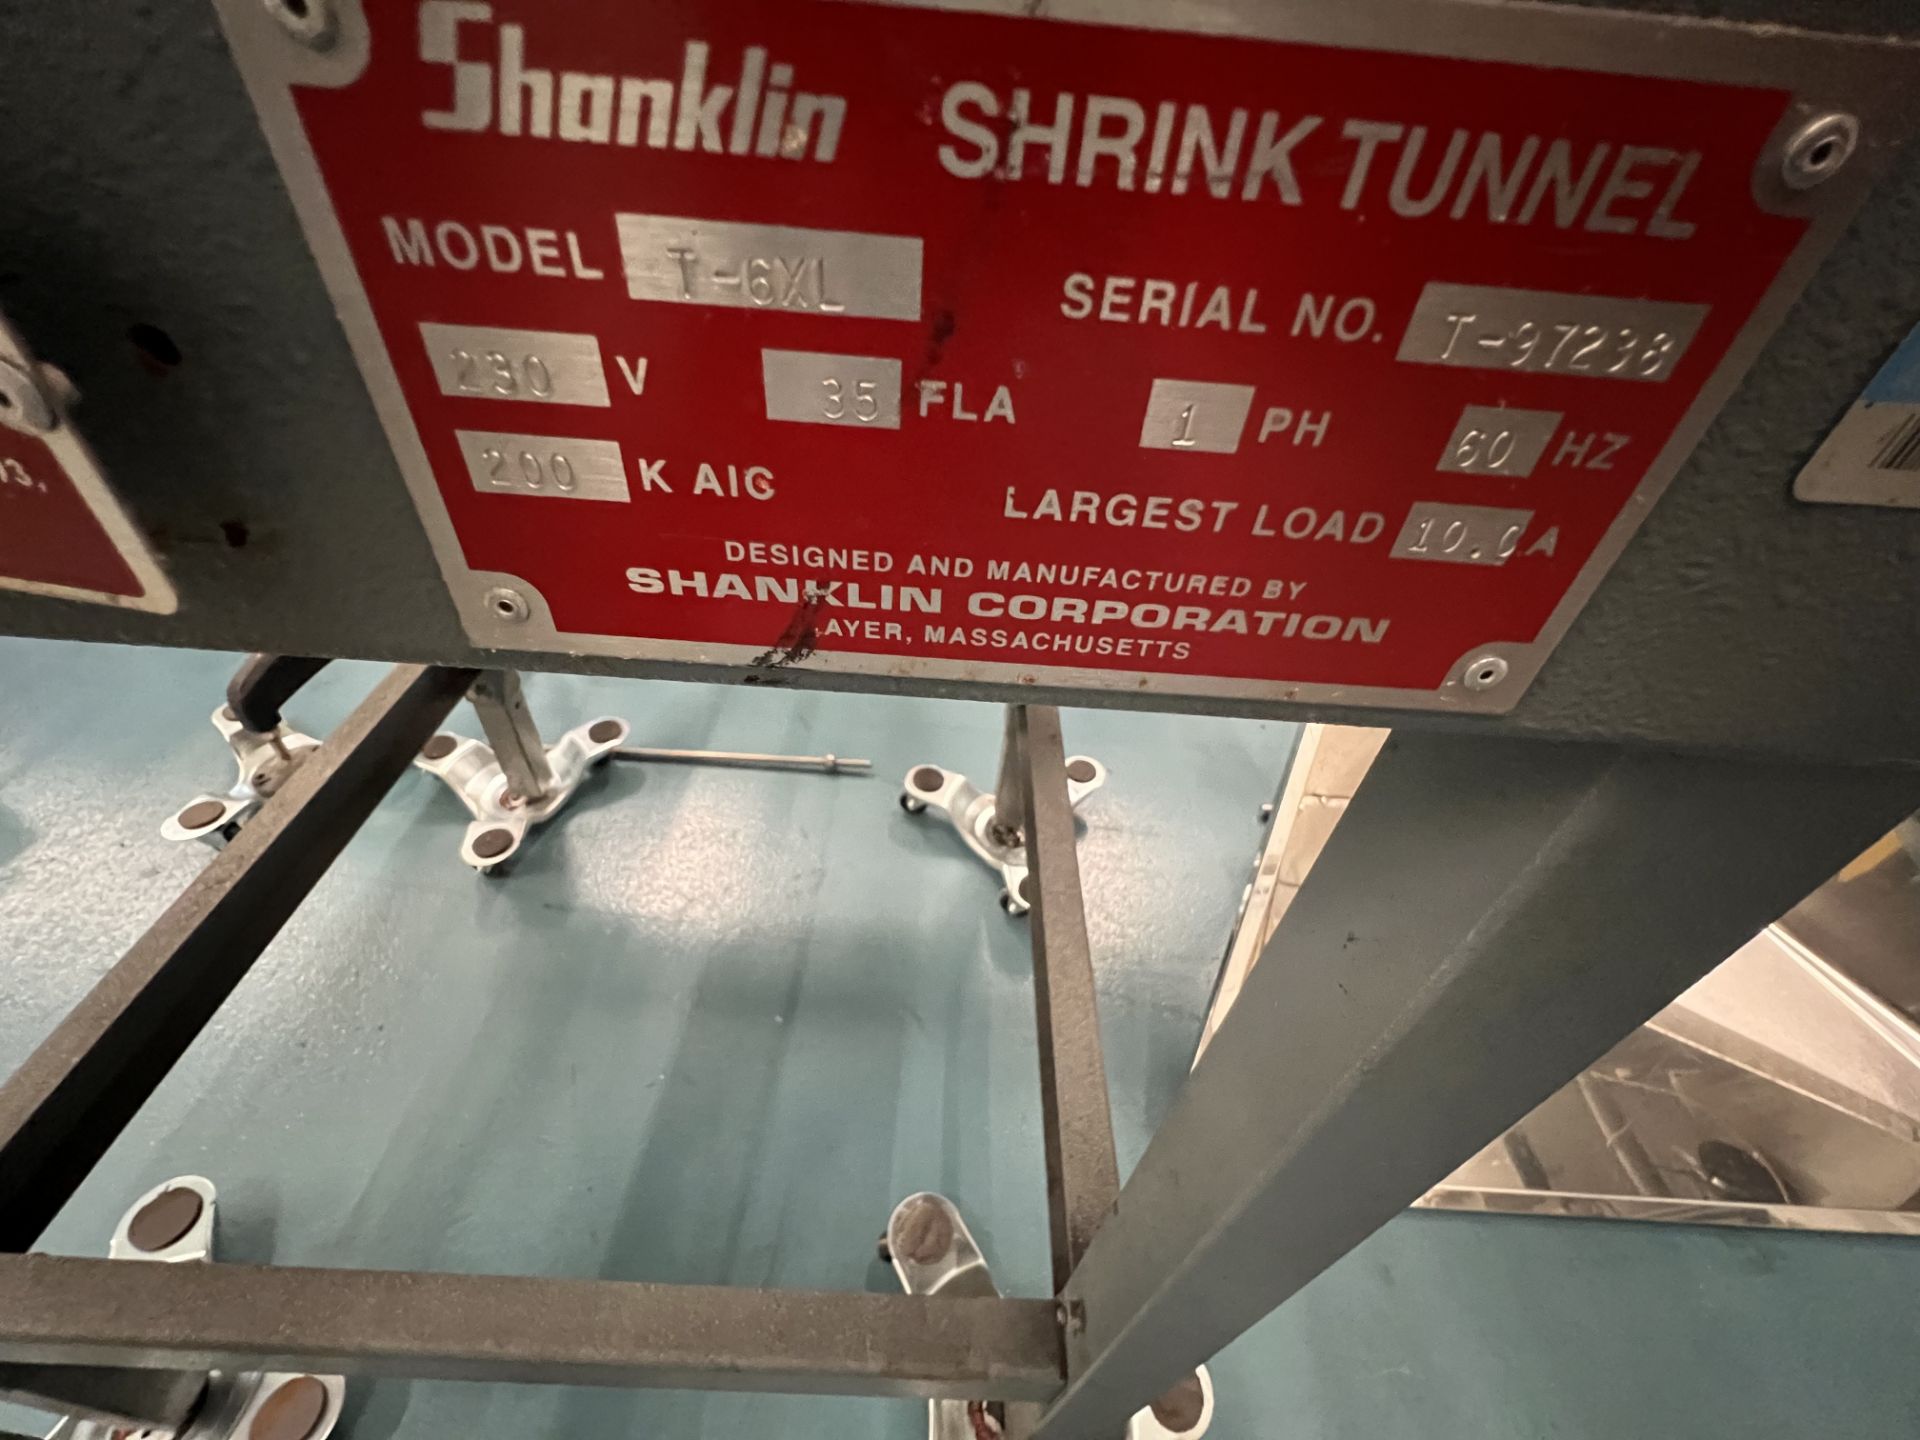 SHANKLIN HEAT SHRINK TUNNEL, MODEL T-6XL, S/N T-97238, SINGLE PHASE - Image 3 of 7